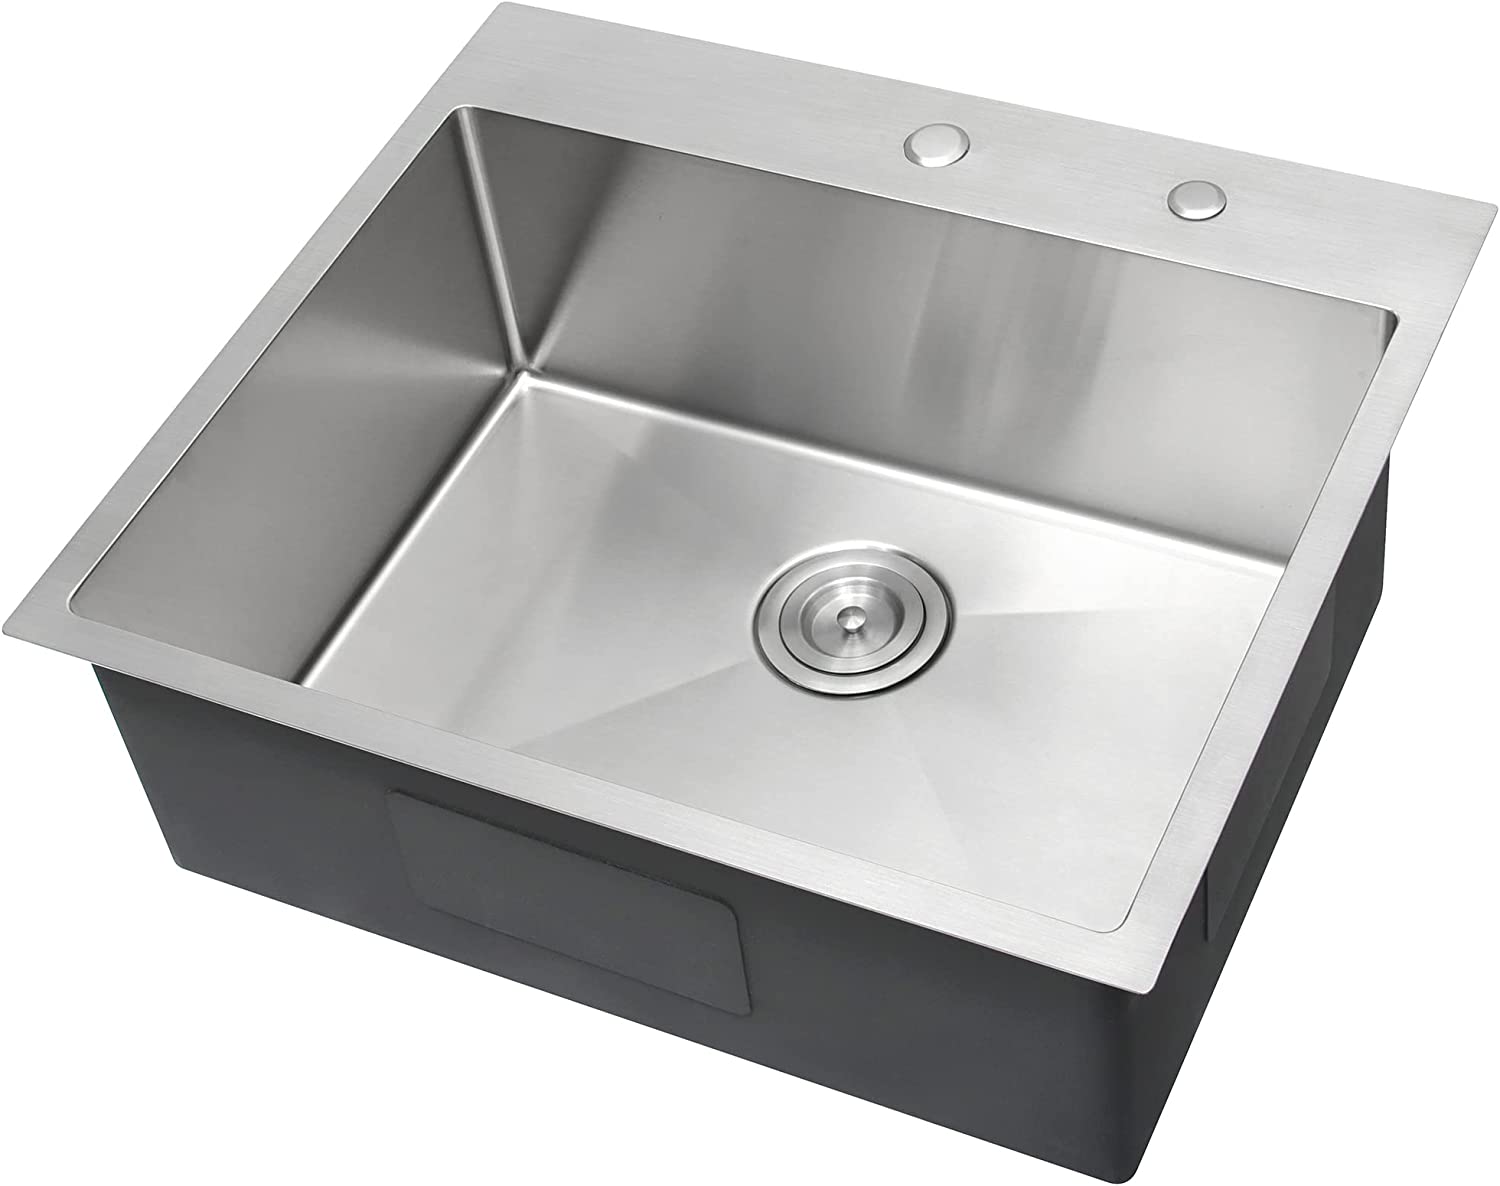 25x22 drop in kitchen sink with drain offset